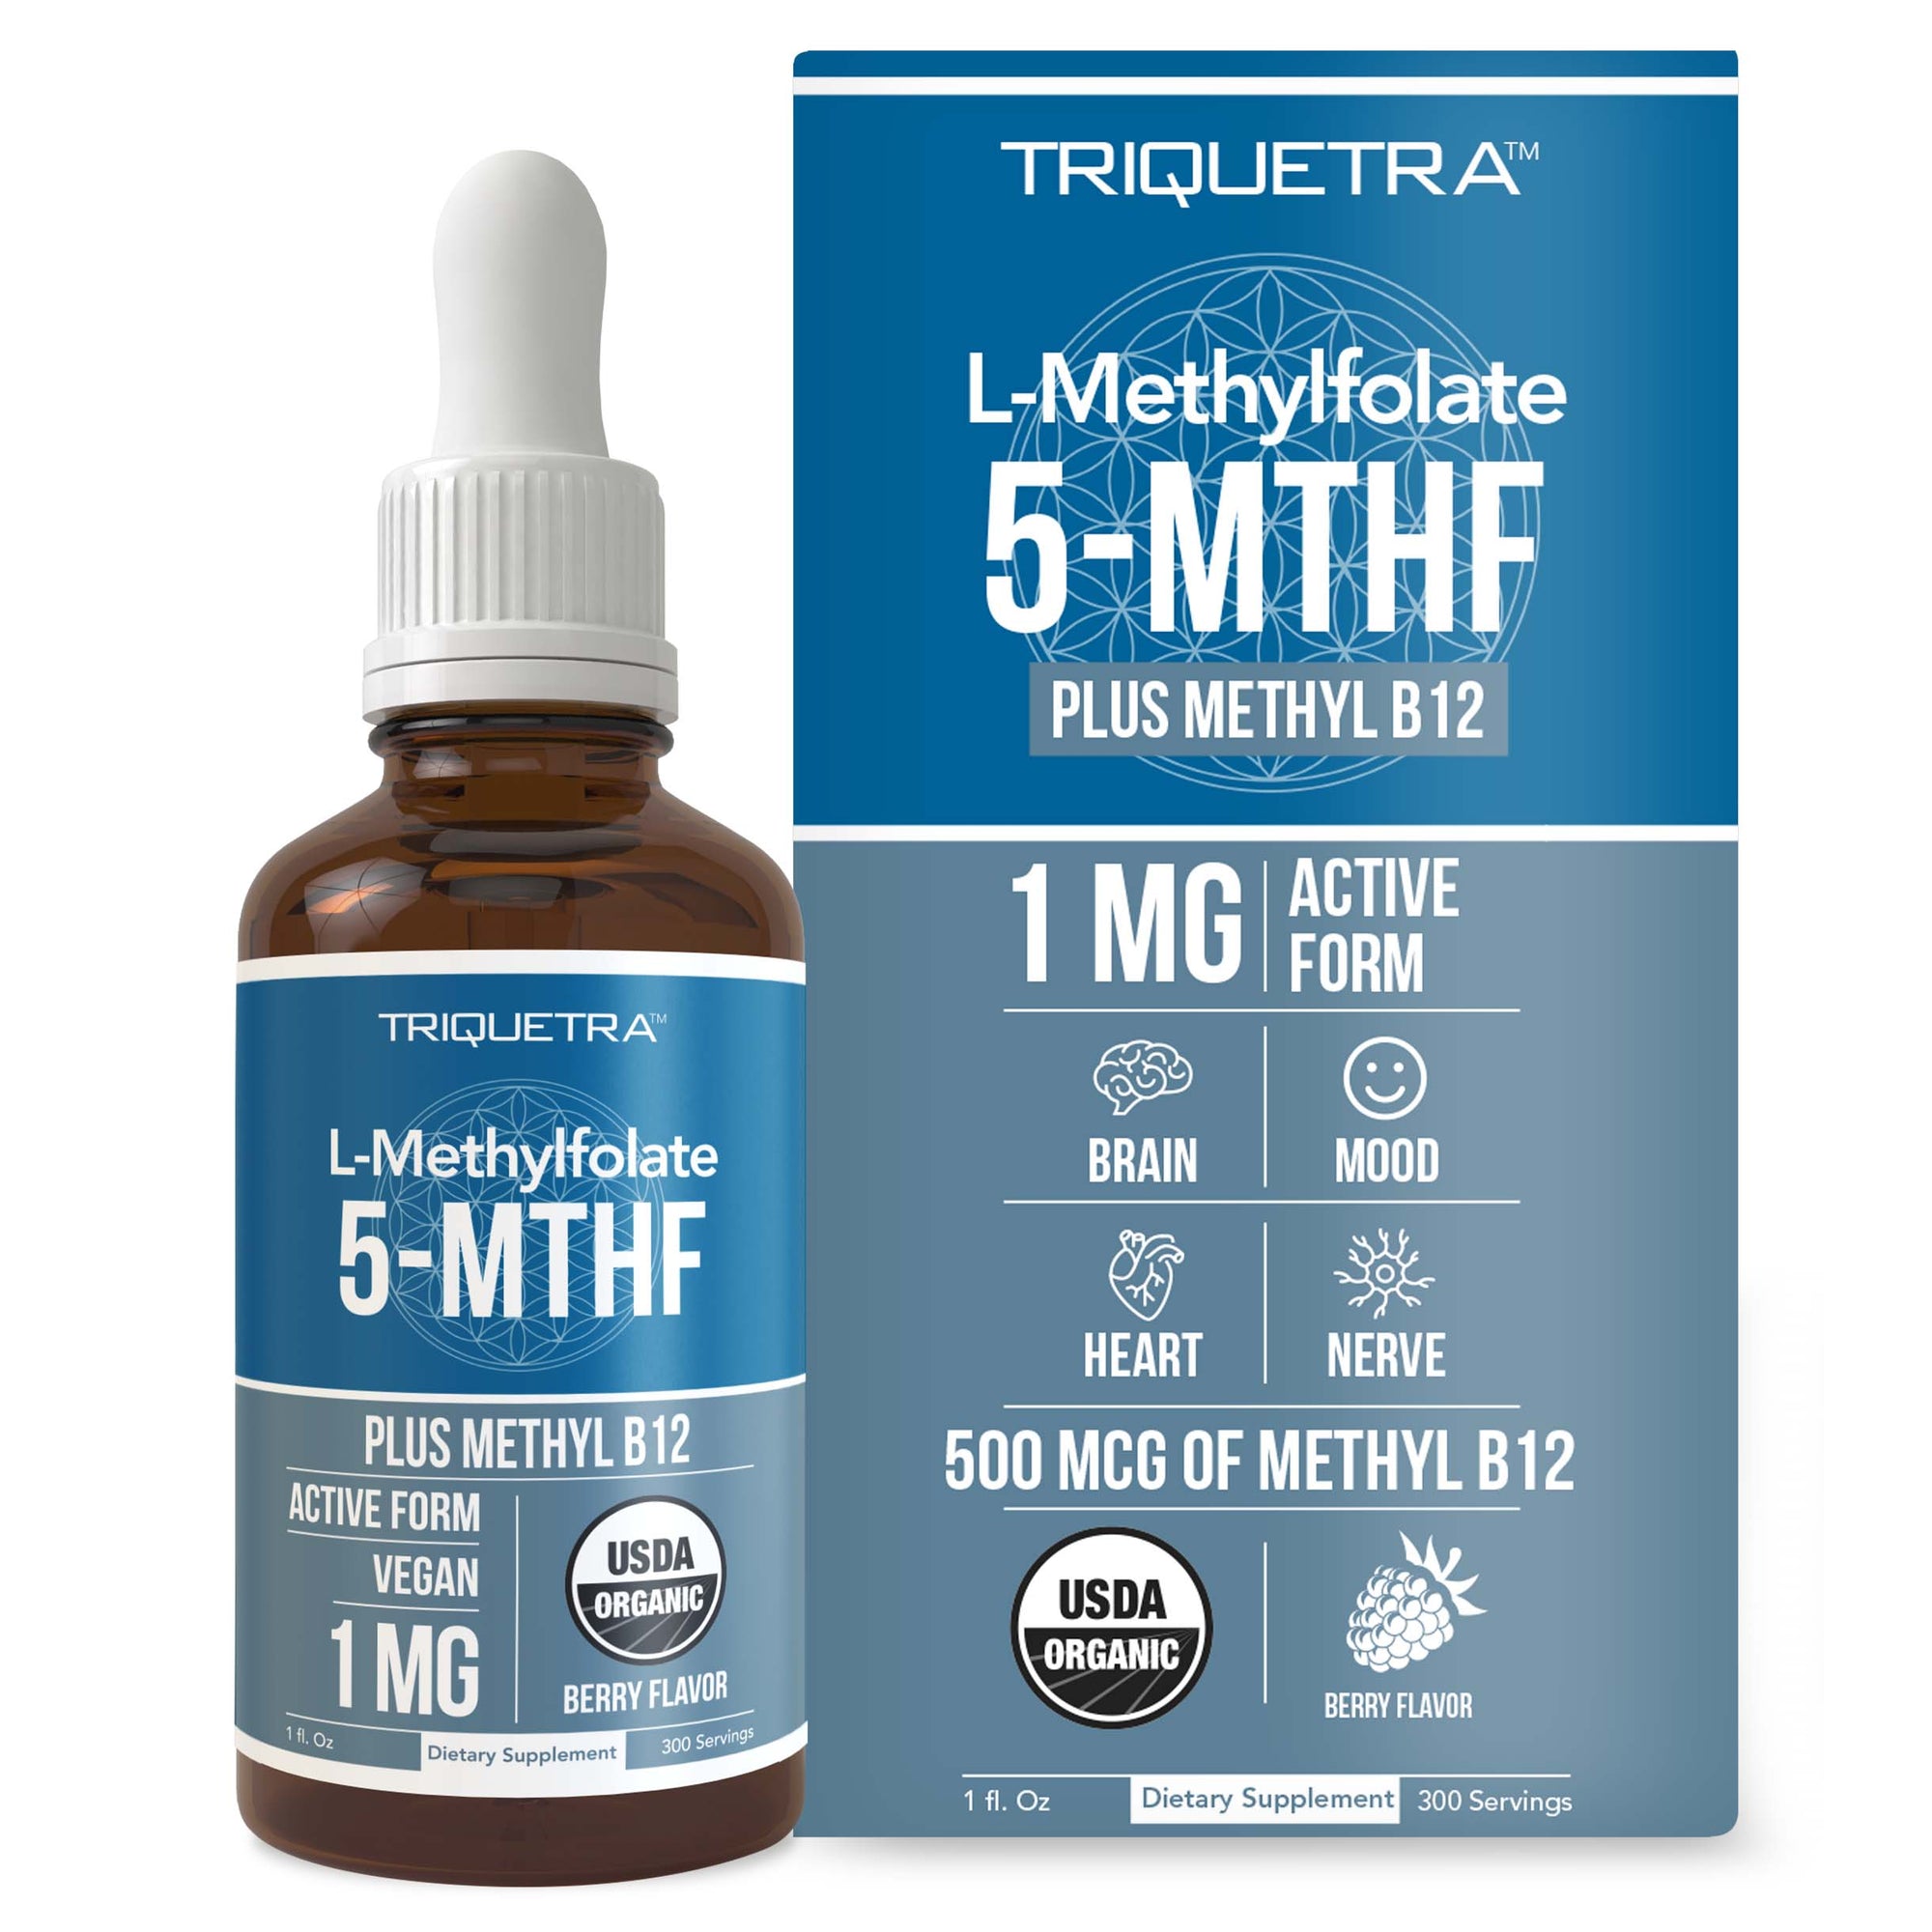 Triquetra Health® Colloidal Silver Liquid Supplement (8oz) - Triquetra™